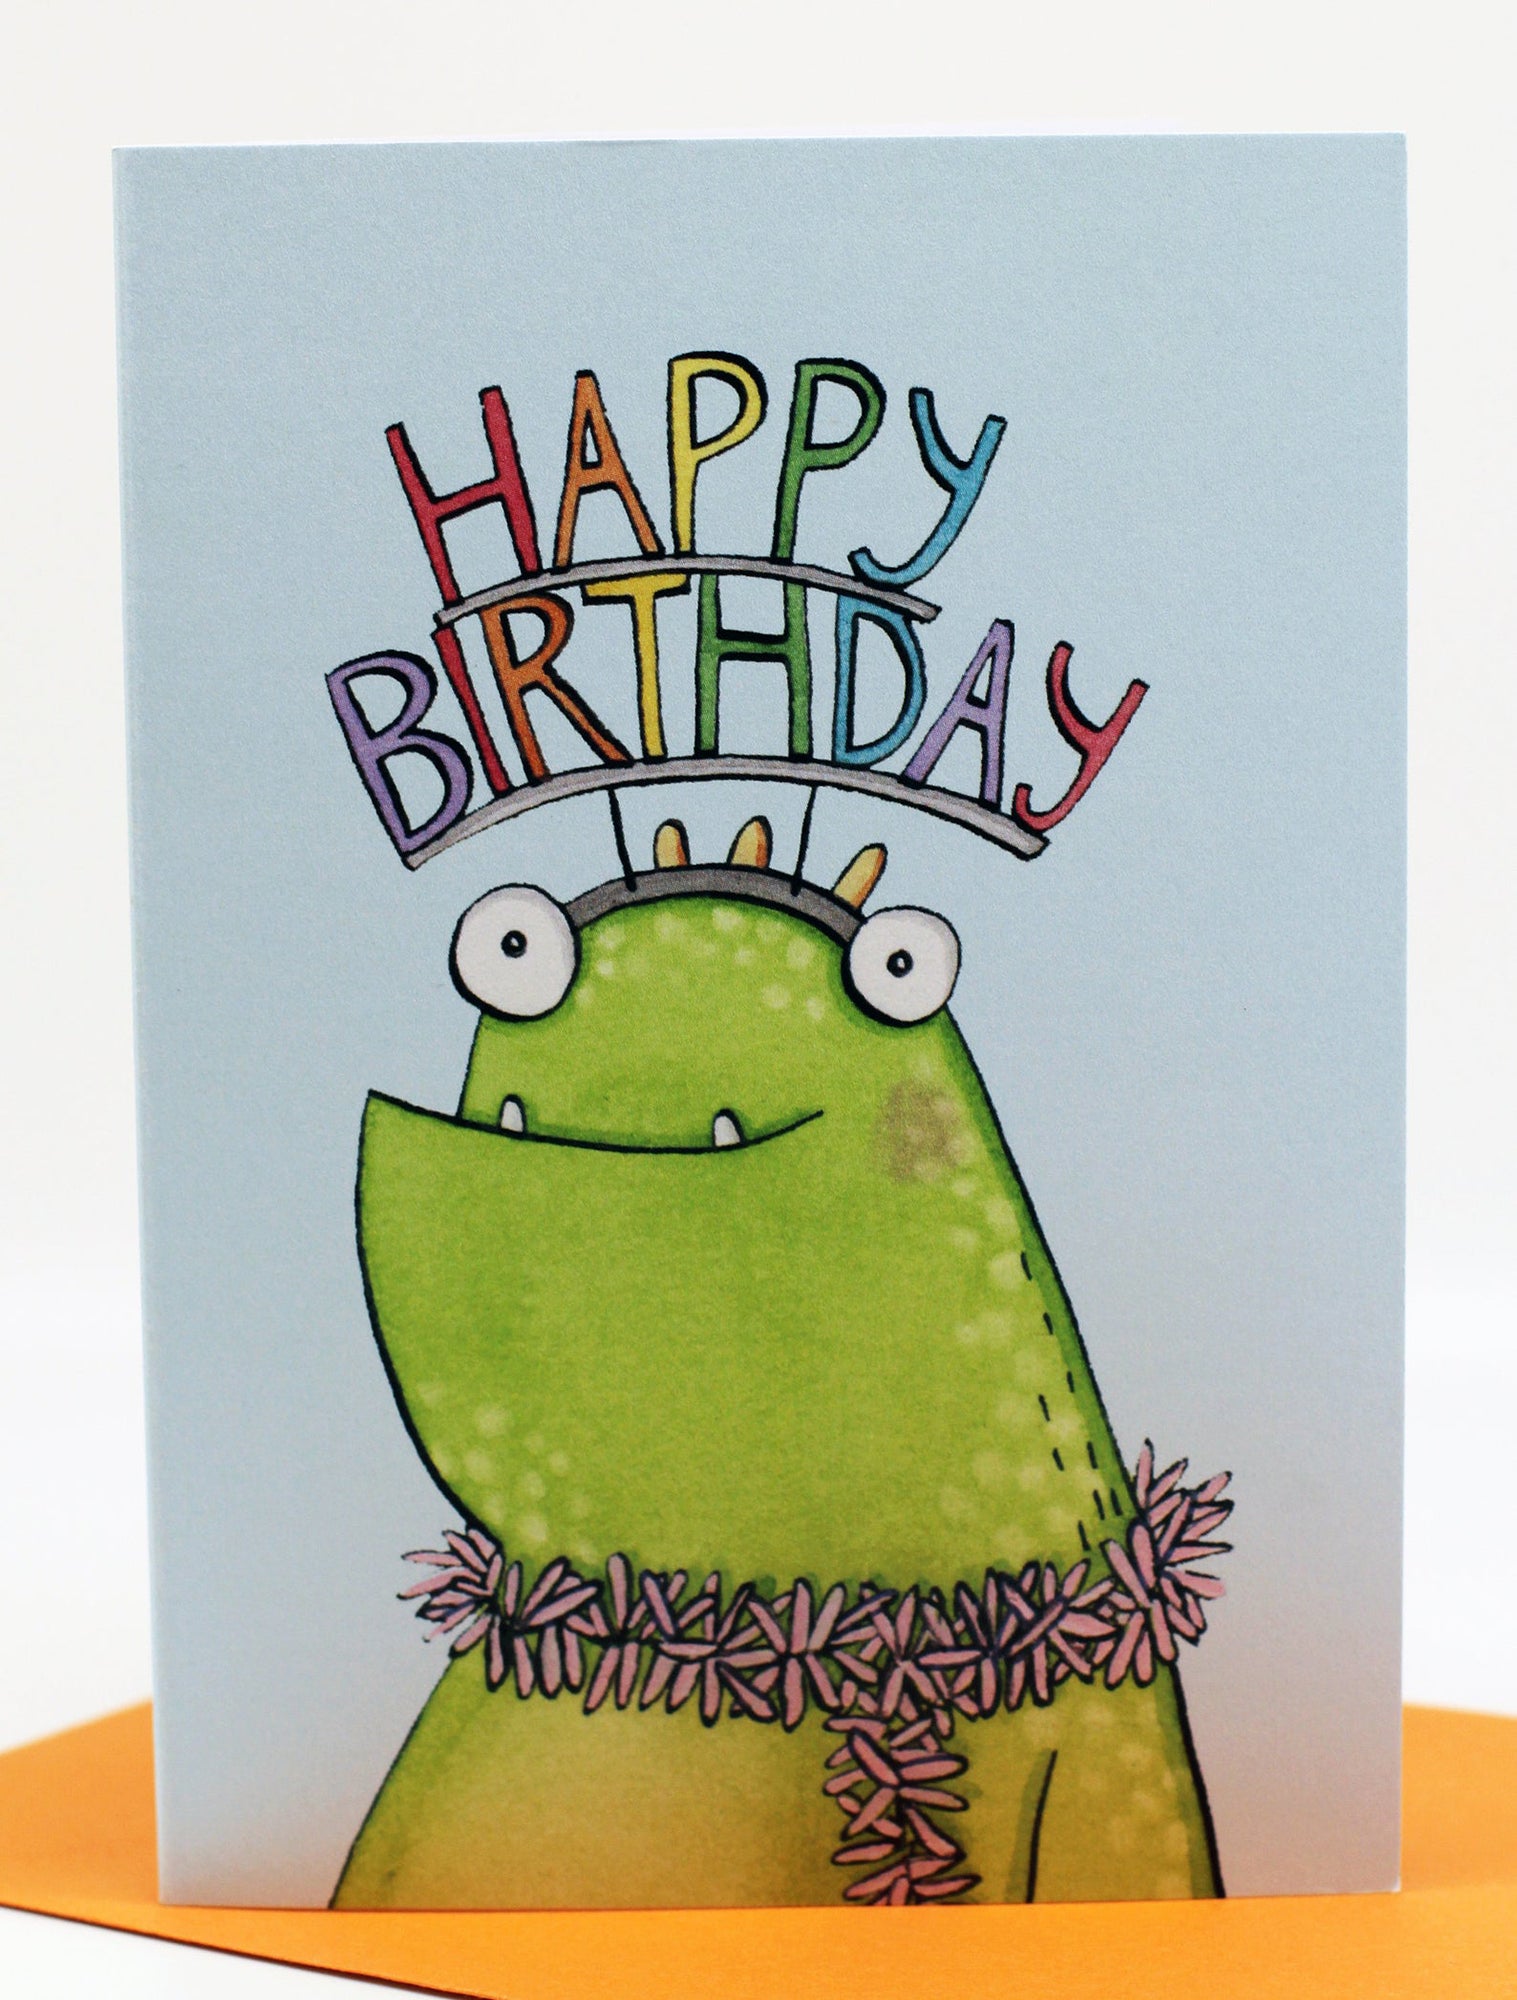 Happy Birthday Monster greetings card